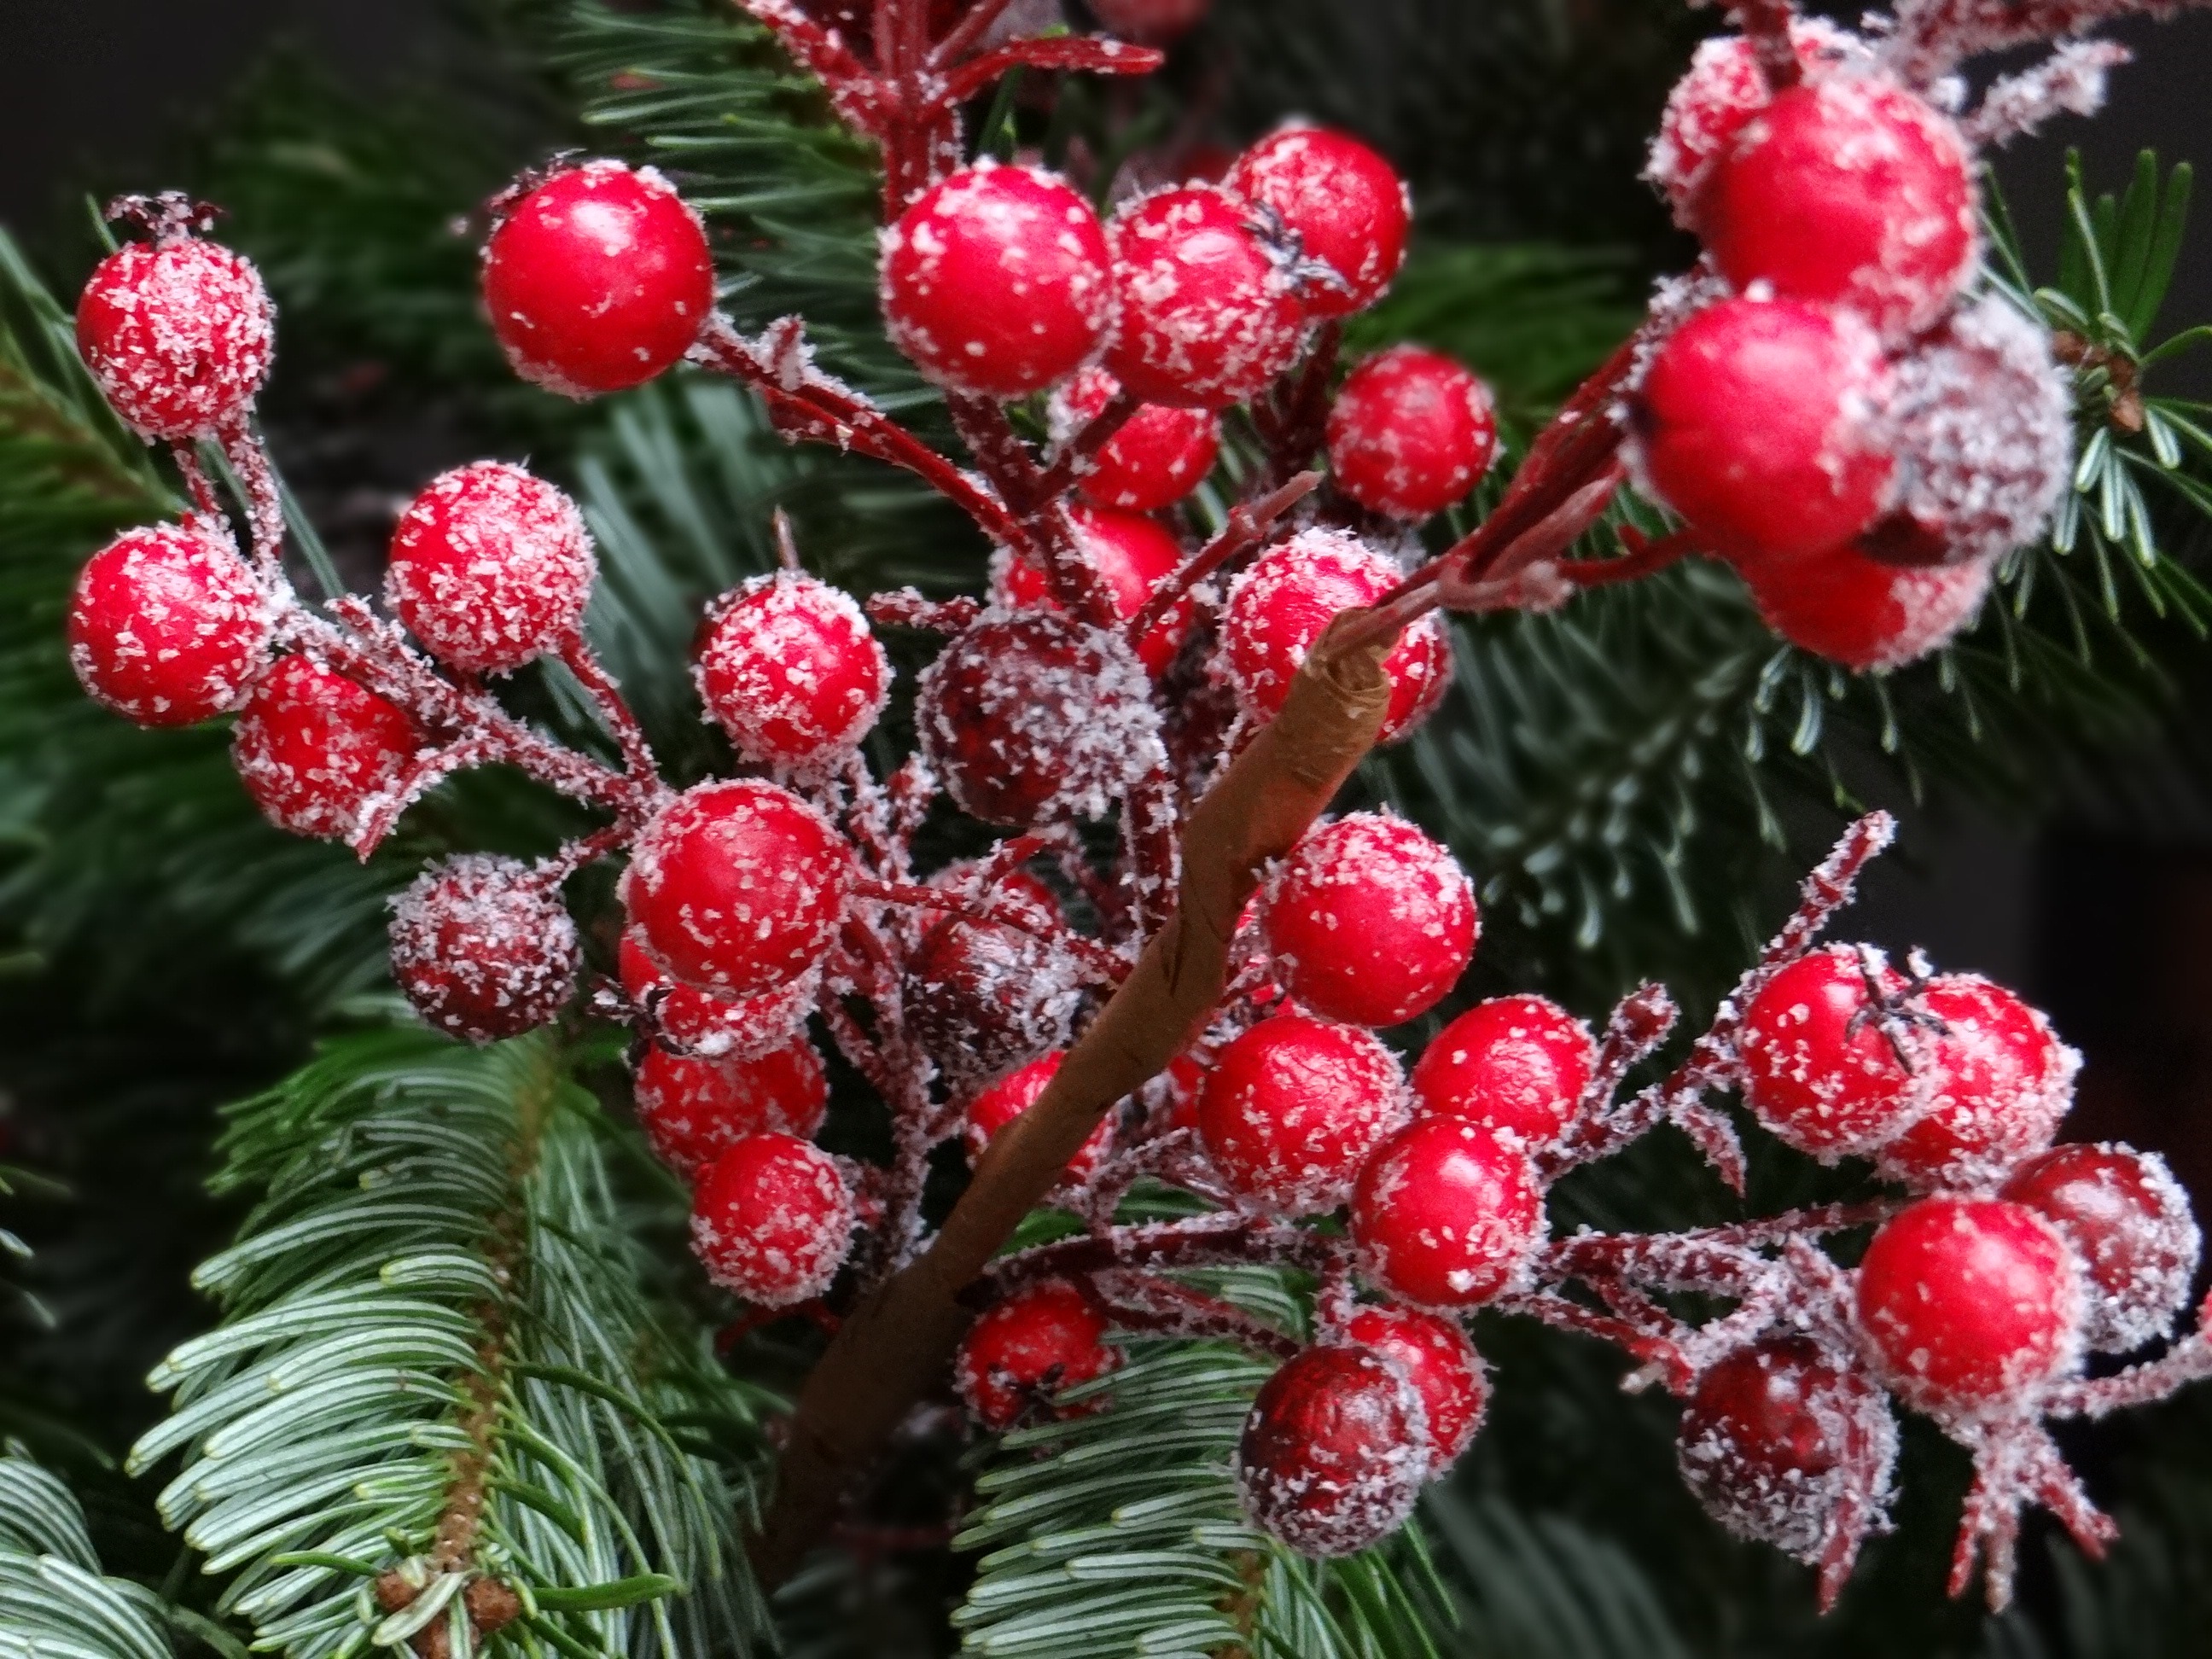 Frozen berries on a twig.